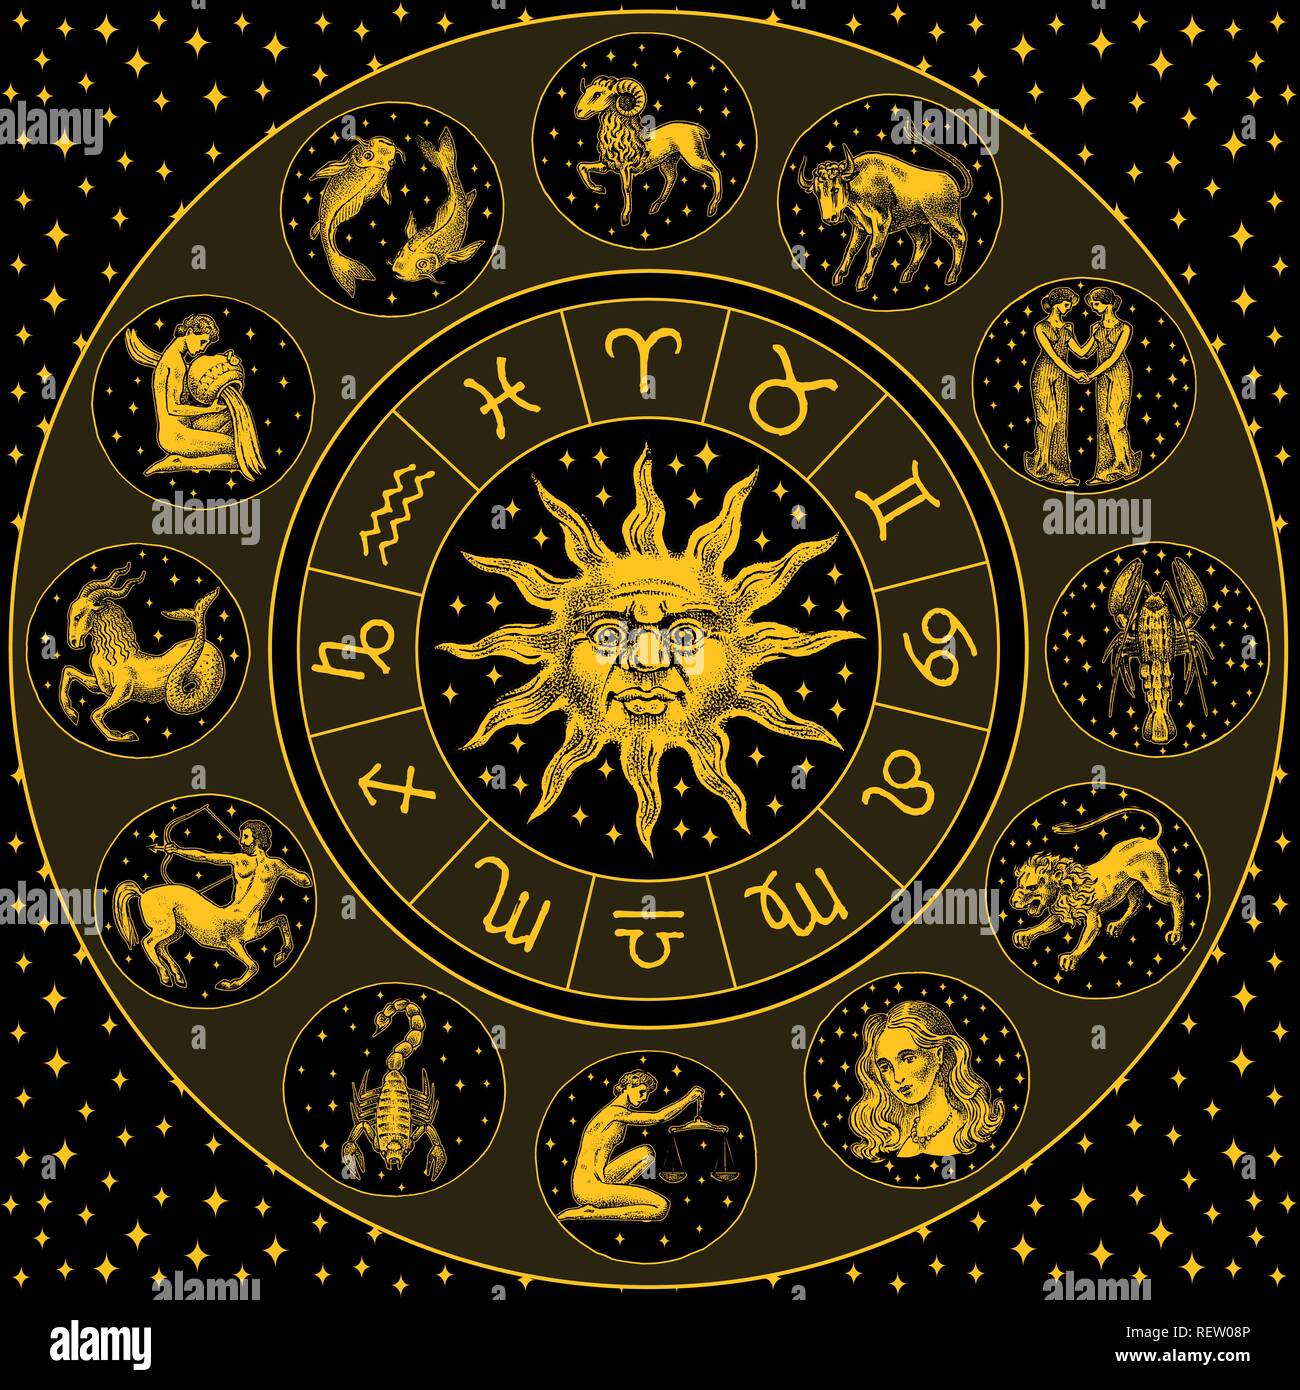 The Zodiac Wheel